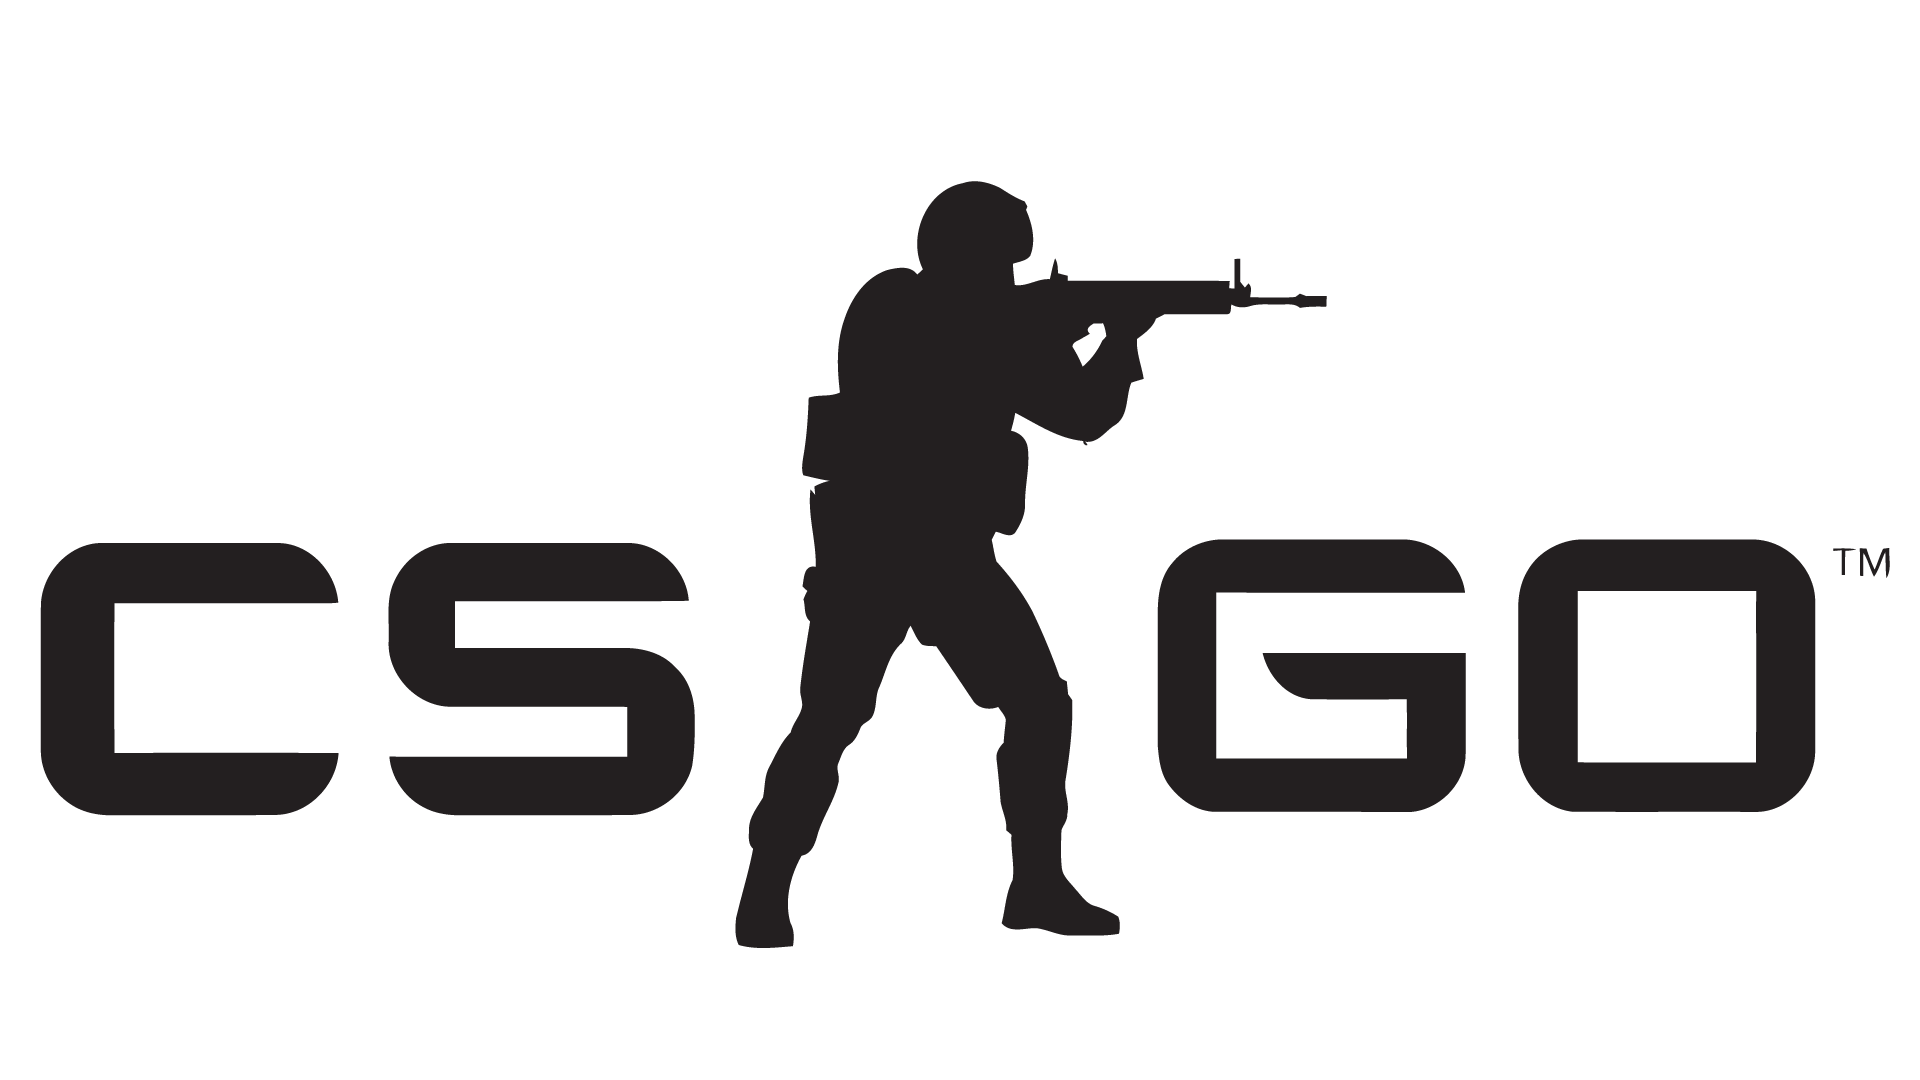 Csgo Logo - Meaning CSGO logo and symbol | history and evolution